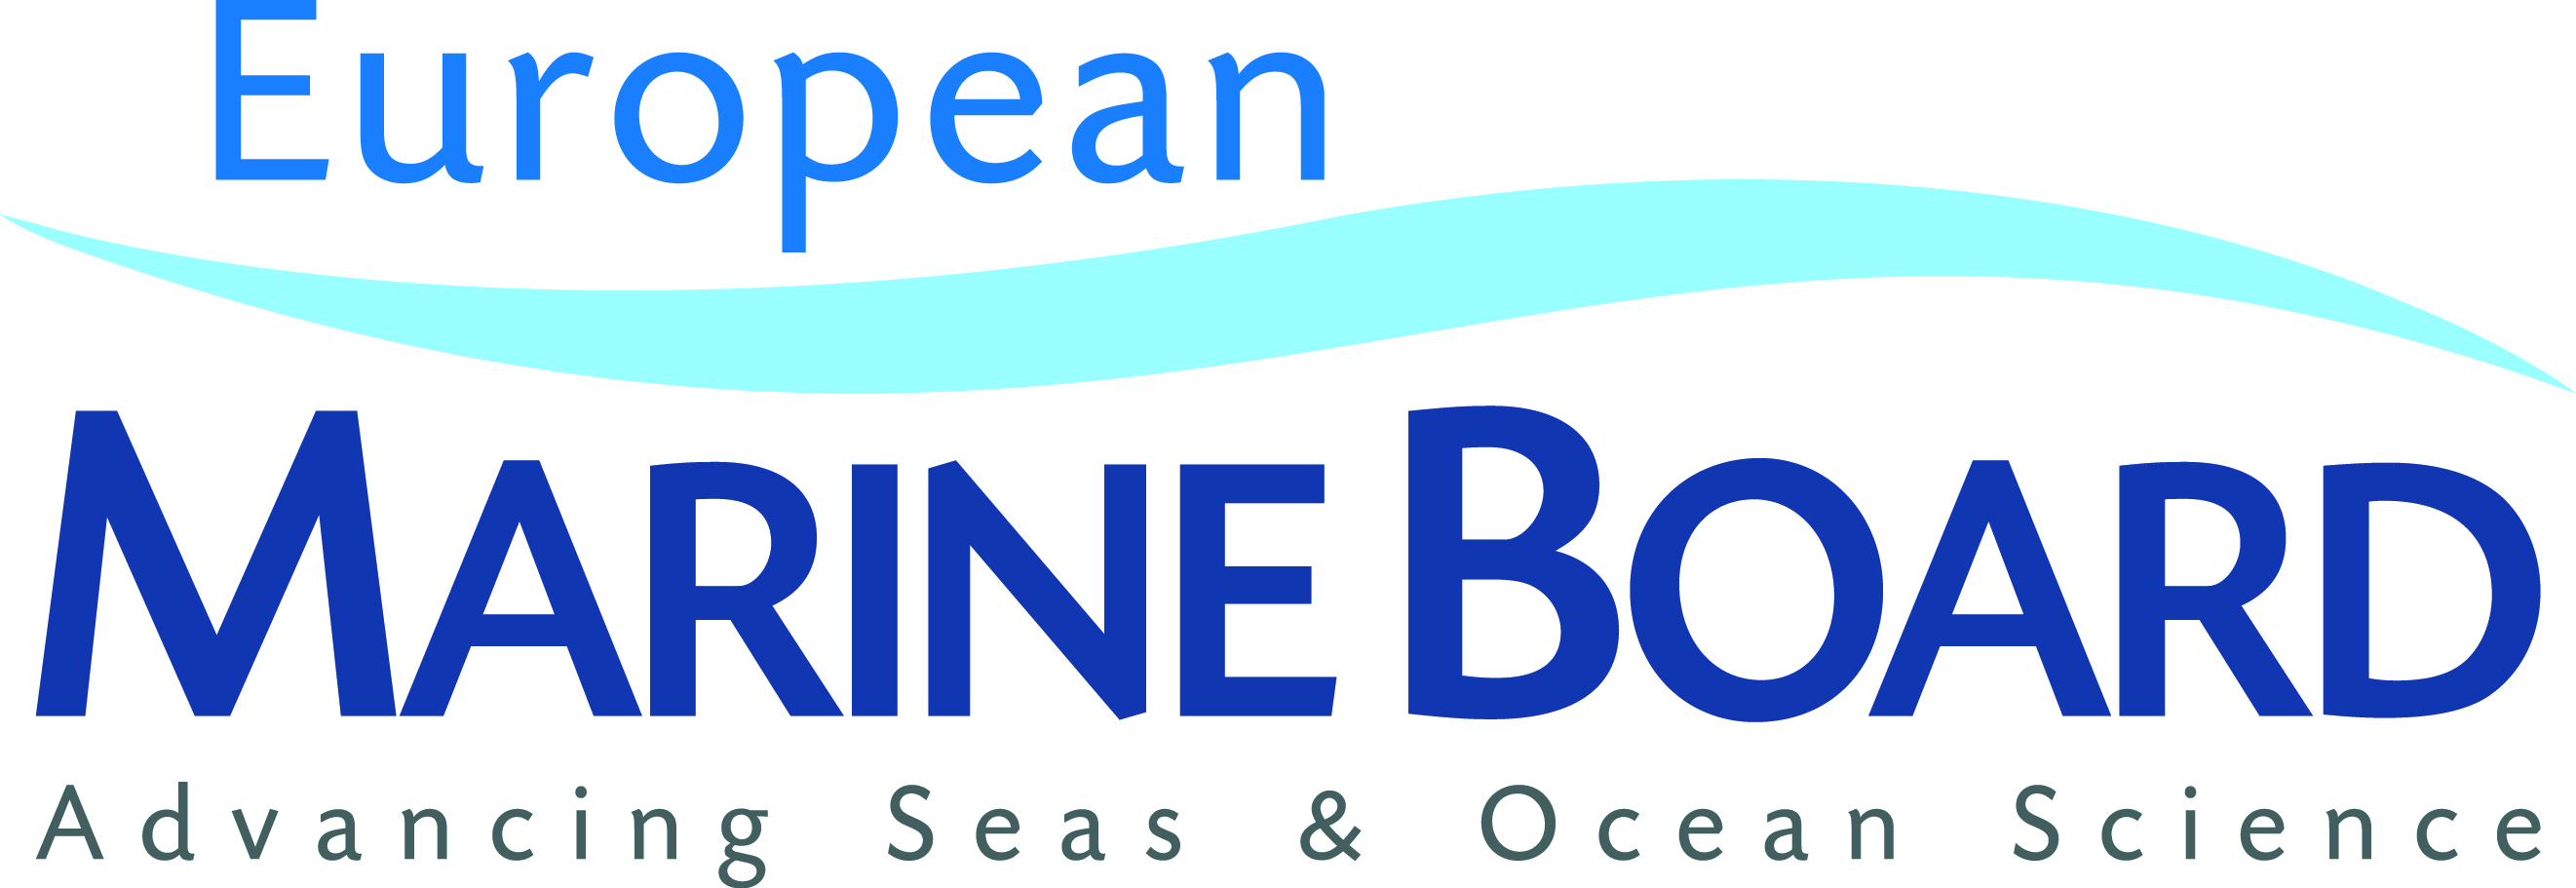 European Marine Board